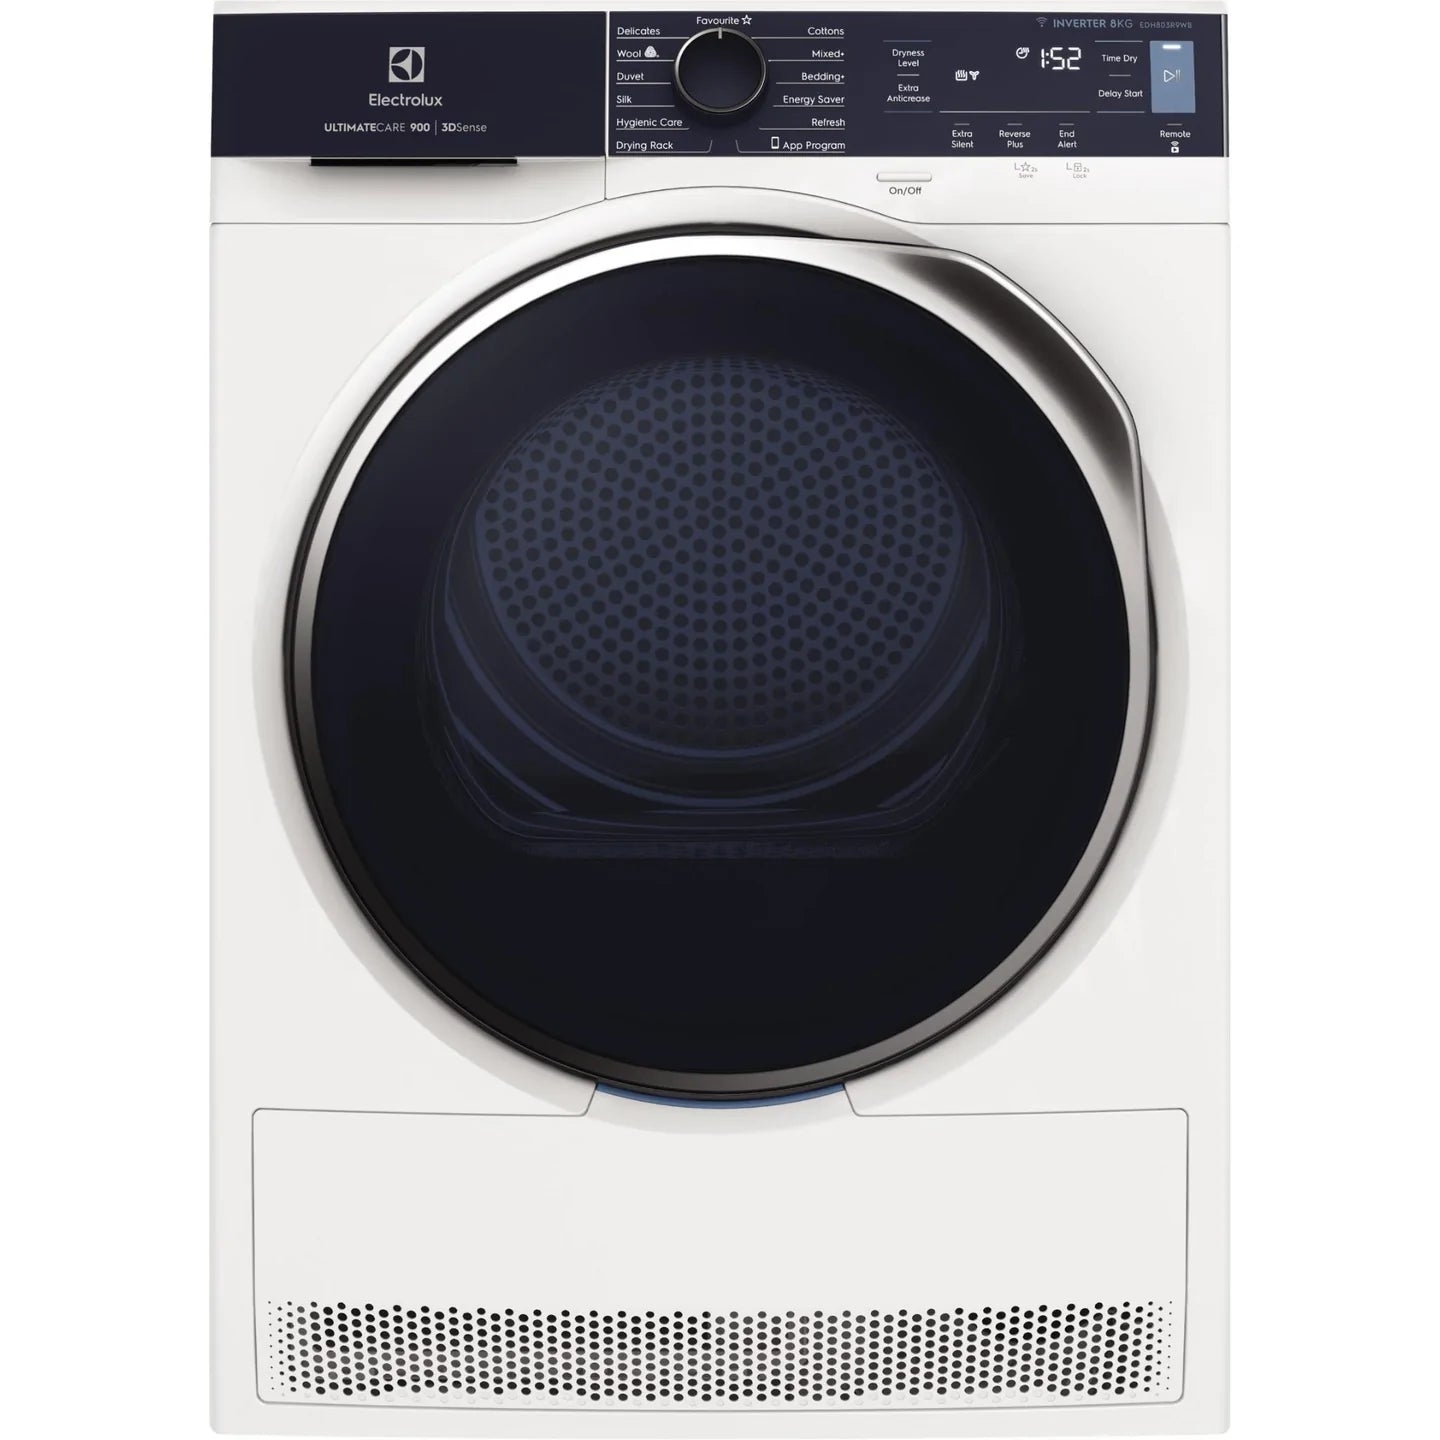 Electrolux 8 kg UltimateCare 900 Heat Pump Dryer - Brisbane Home Appliances